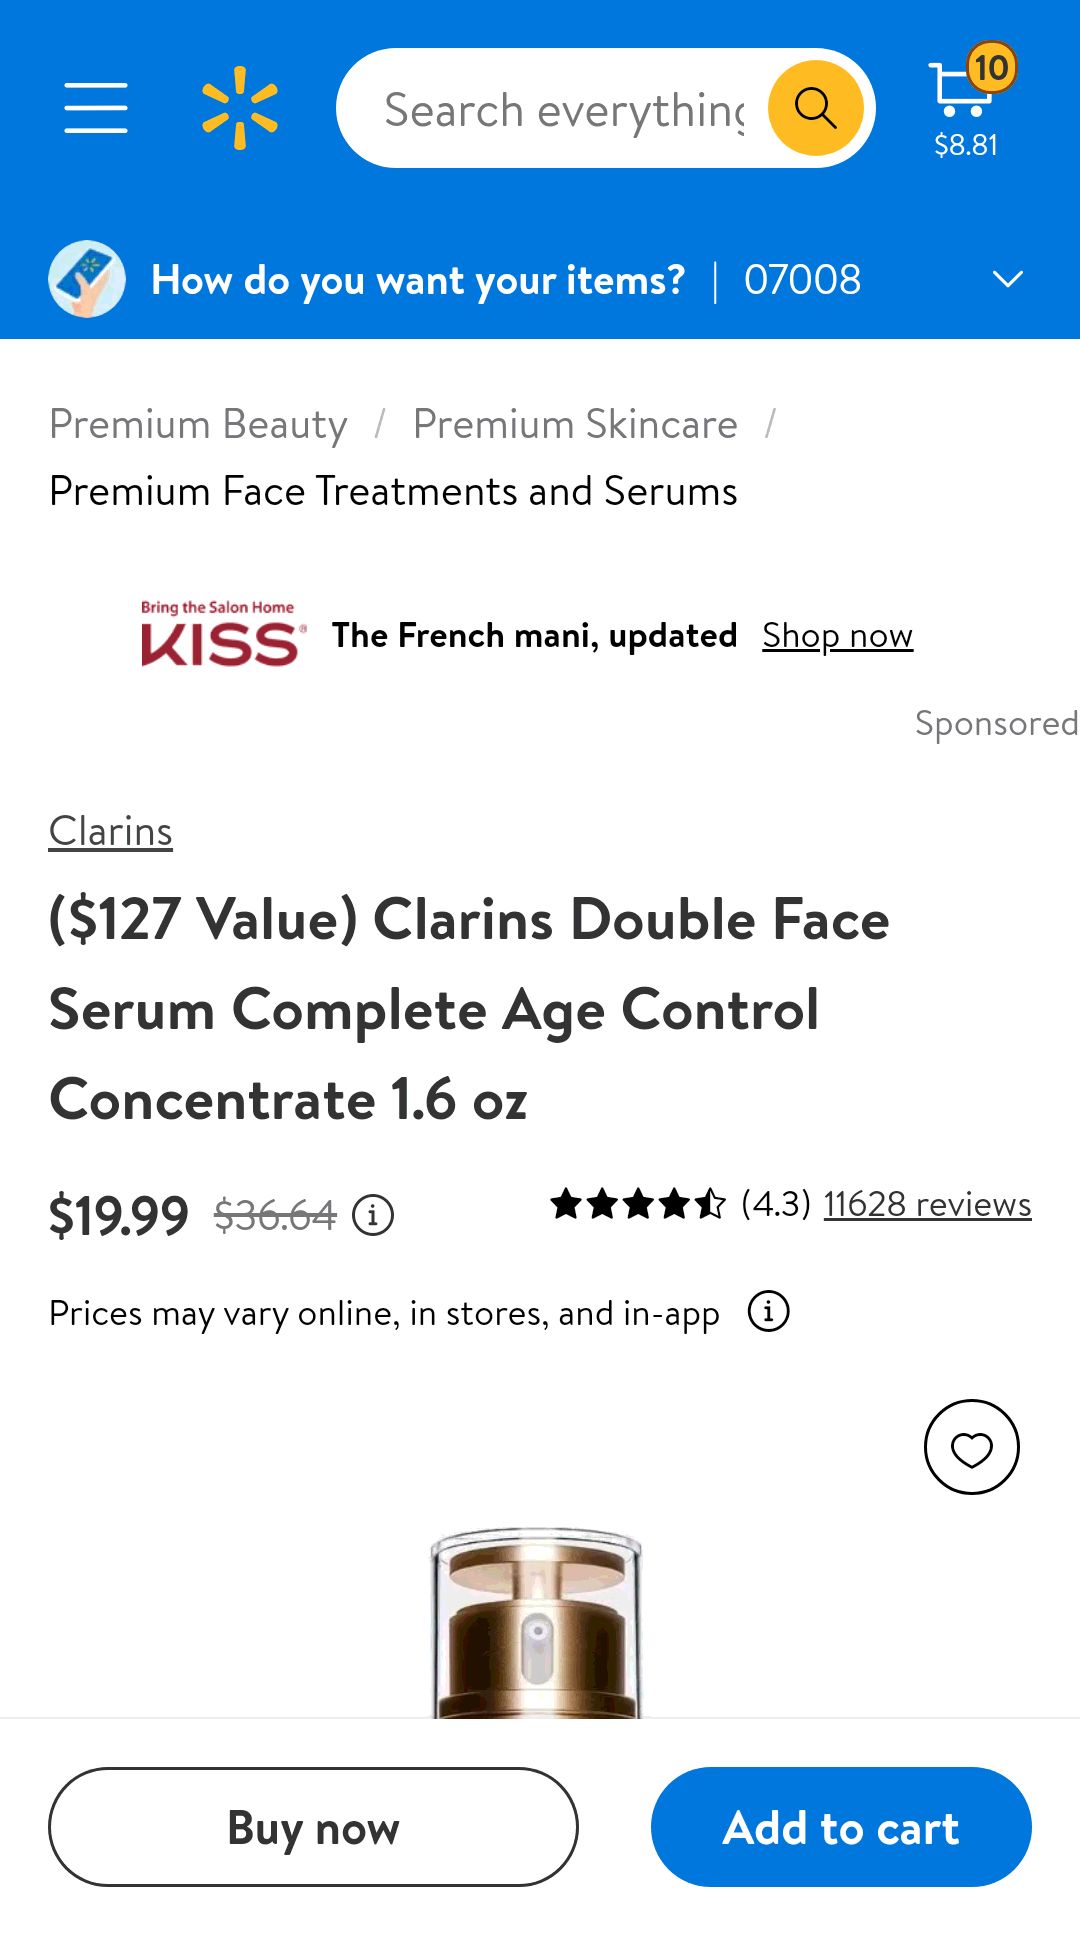 ($127 Value) Clarins Double Face Serum Complete Age Control Concentrate 1.6 oz -  娇韵诗脸精华